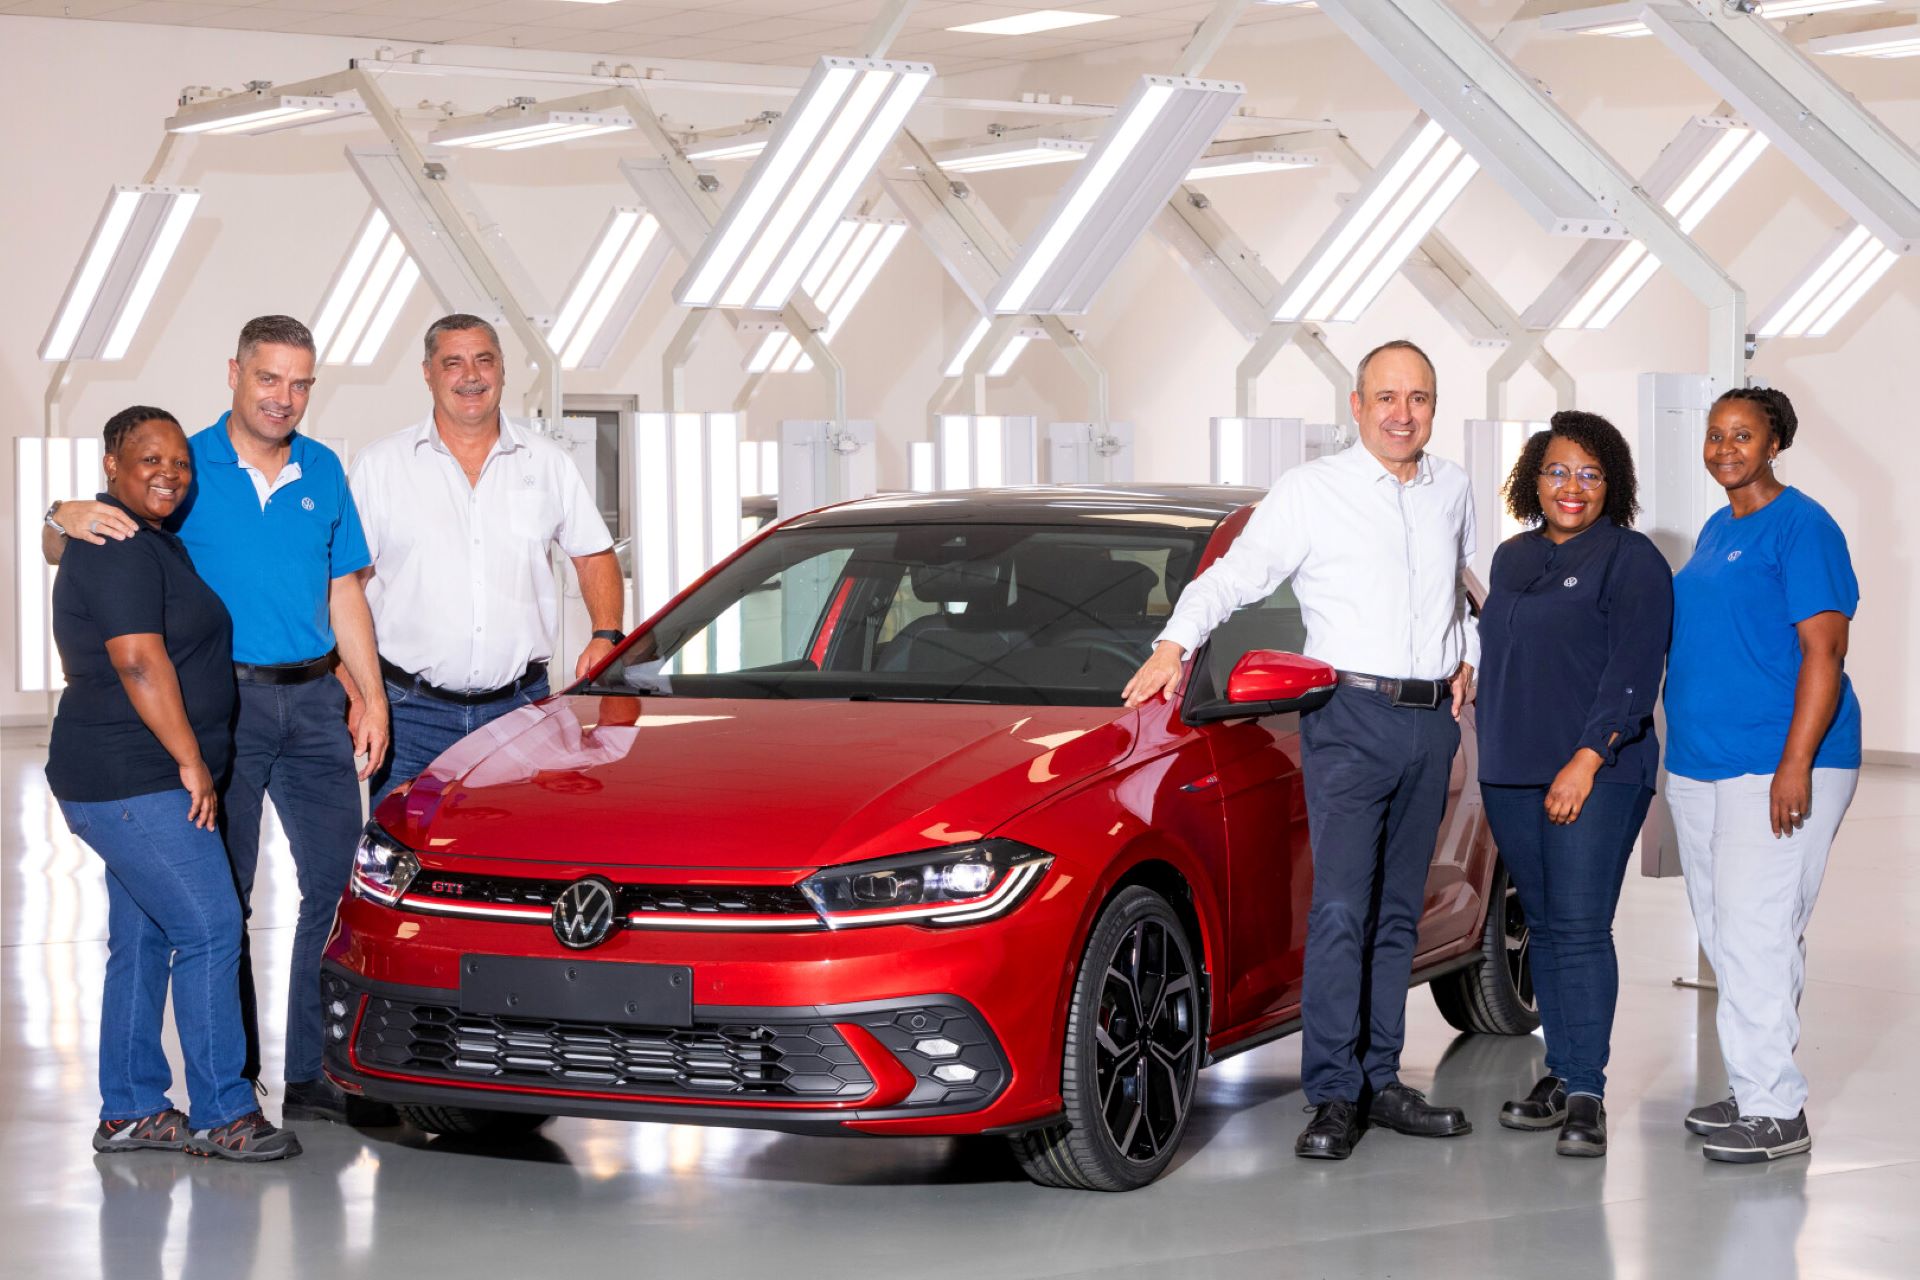 VW builds 1.5-millionth export vehicle